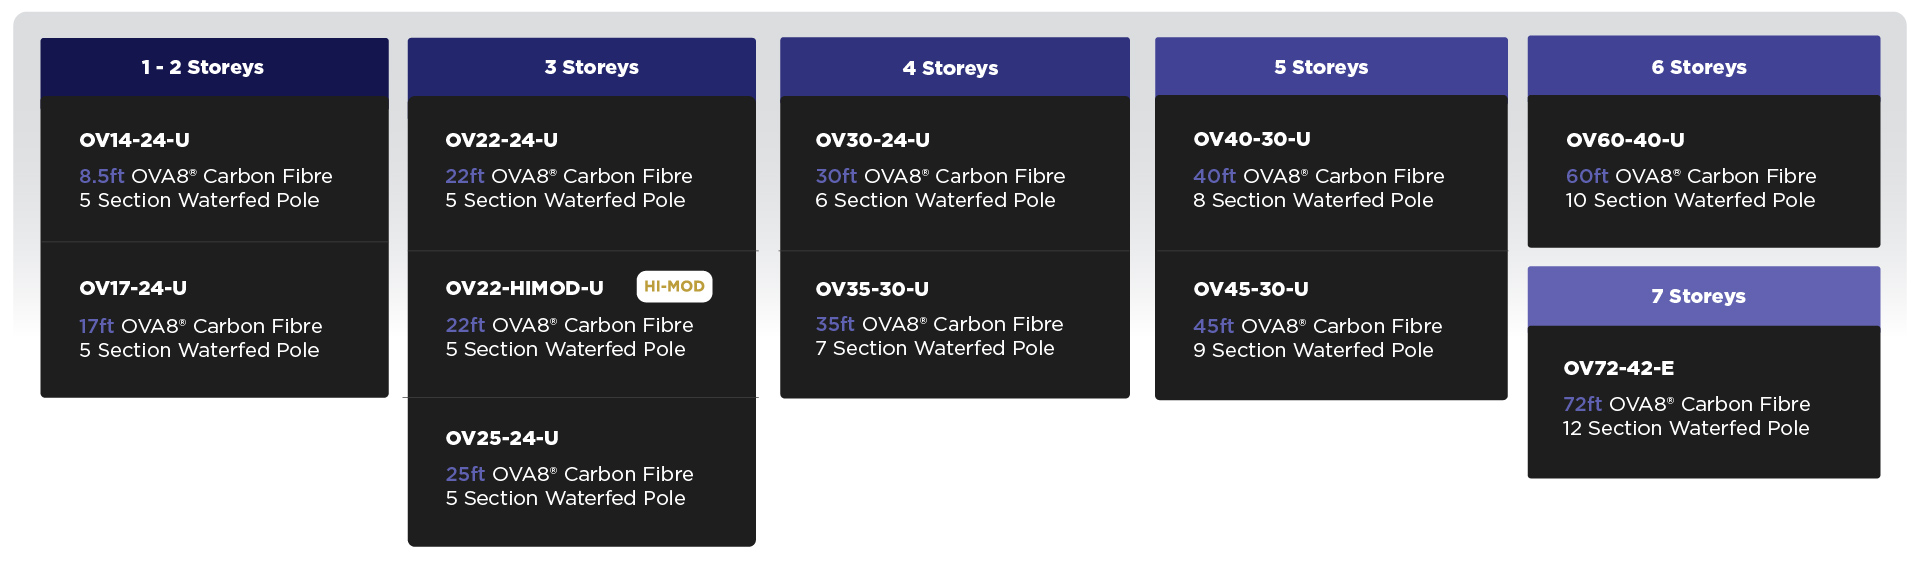 Streamline OVA8 Carbon Fibre Waterfed Pole Size Guide